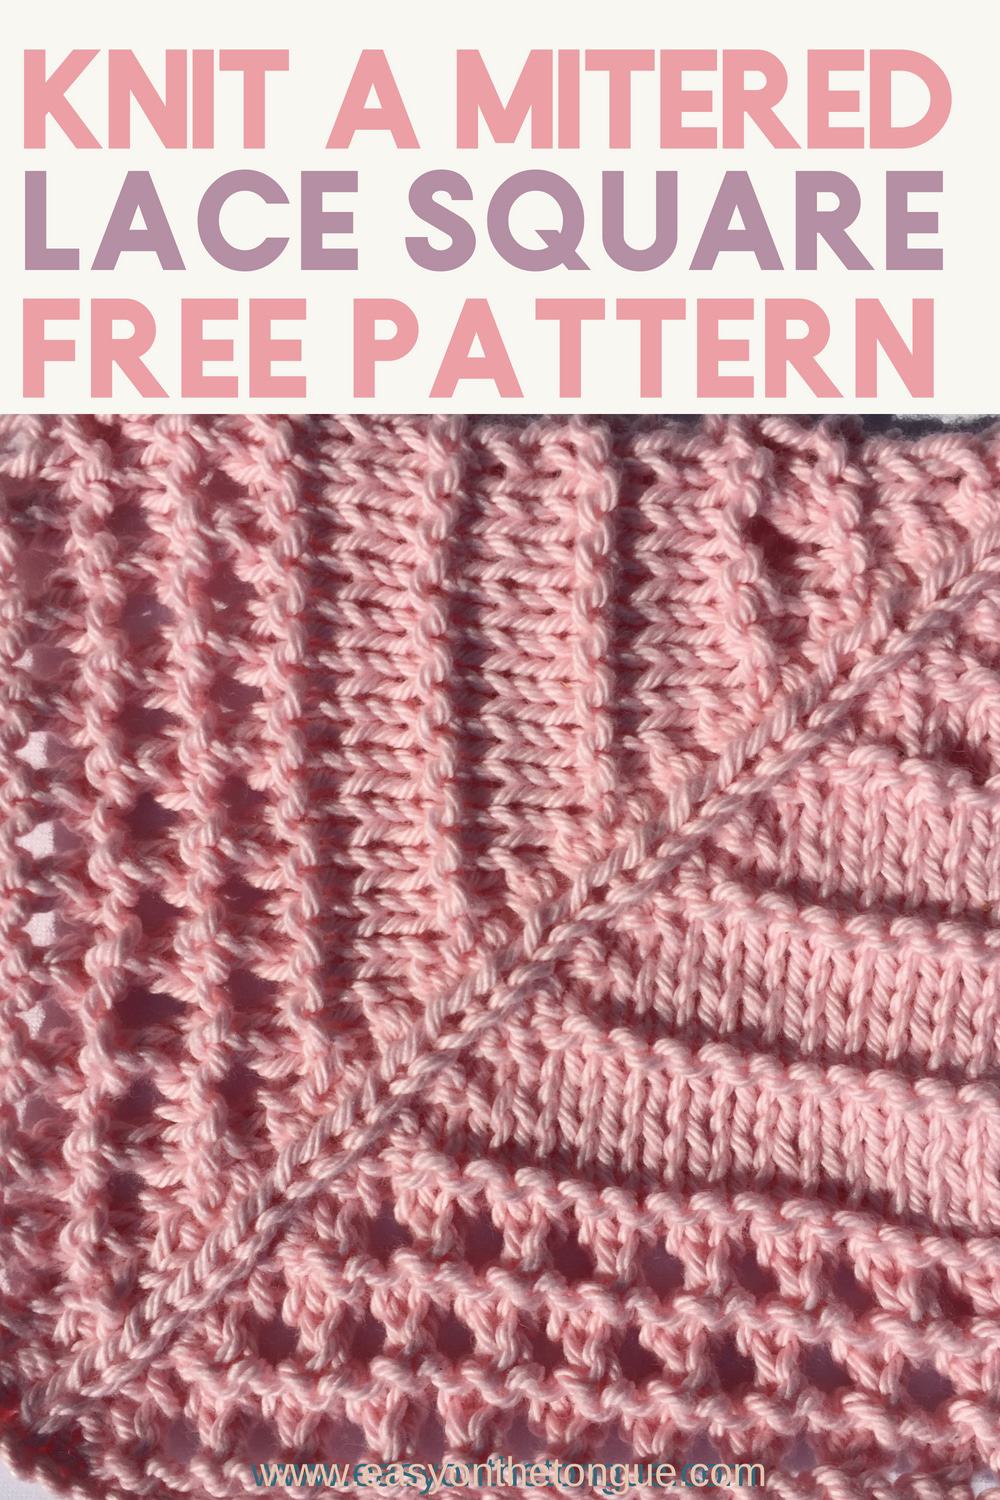 Knit Mitred Lace Square Pattern miteredsquare knitlacesquare knitsquare Knitting Stitches – How to Knit Moss Rib